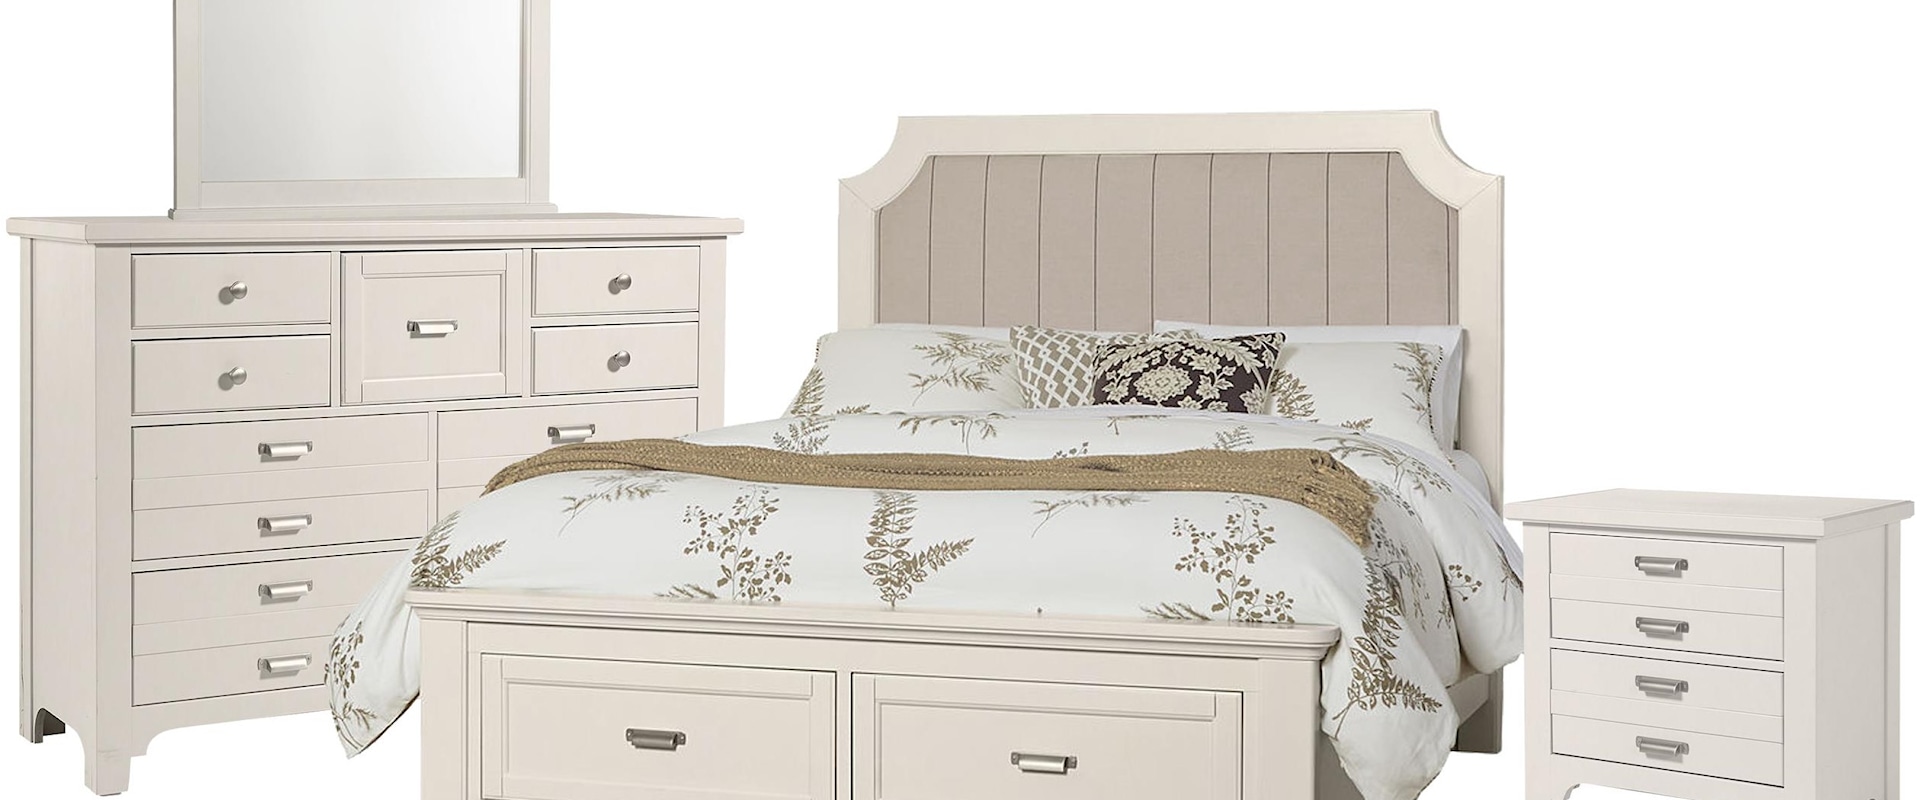 Queen Upholstered Storage Bed, 9 Drawer Dresser, Master Landscape Mirror, 2 Drawer Nightstand